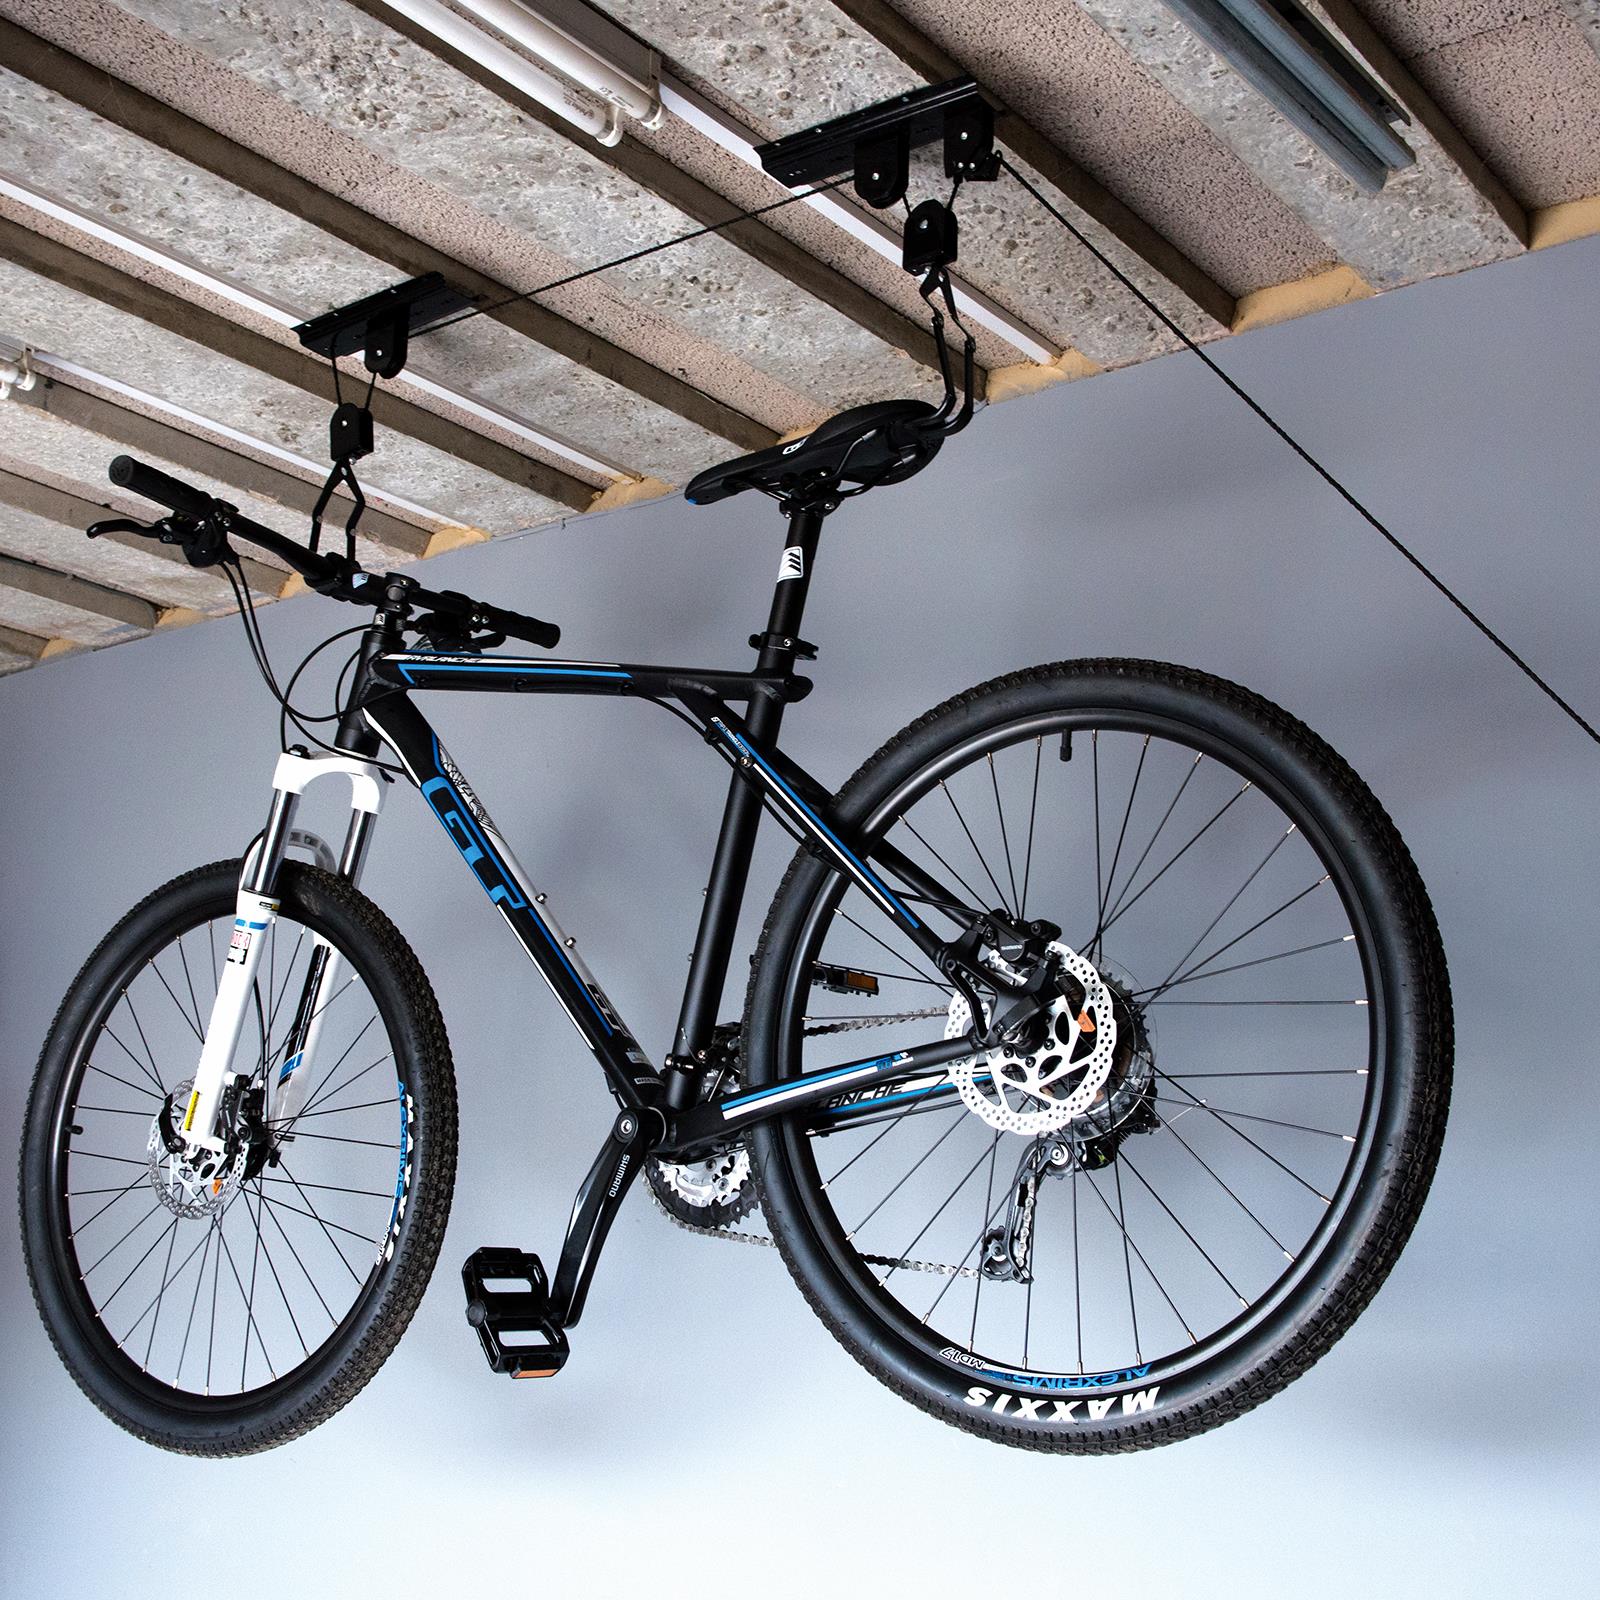 Silverline 20kg Bike Lift Bicycle Garage Rubber Hooks Locking